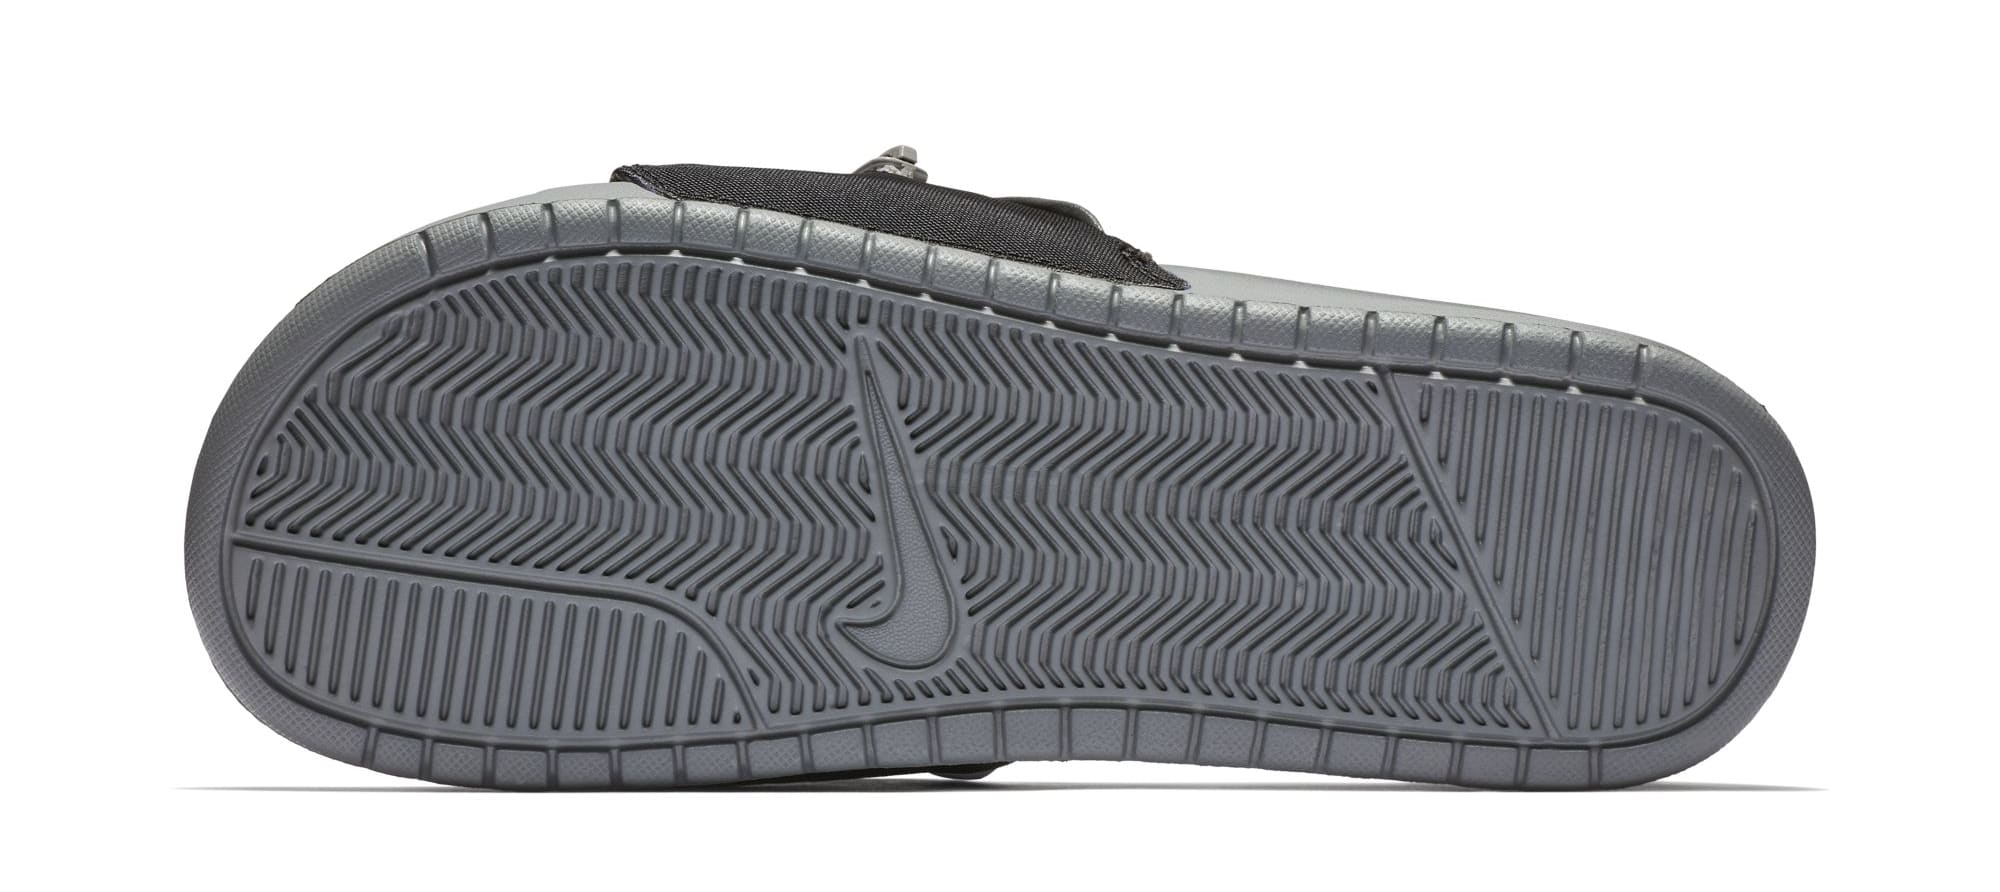 Nike Is Reportedly Releasing 'Fanny Pack' Benassi Slide Sandals